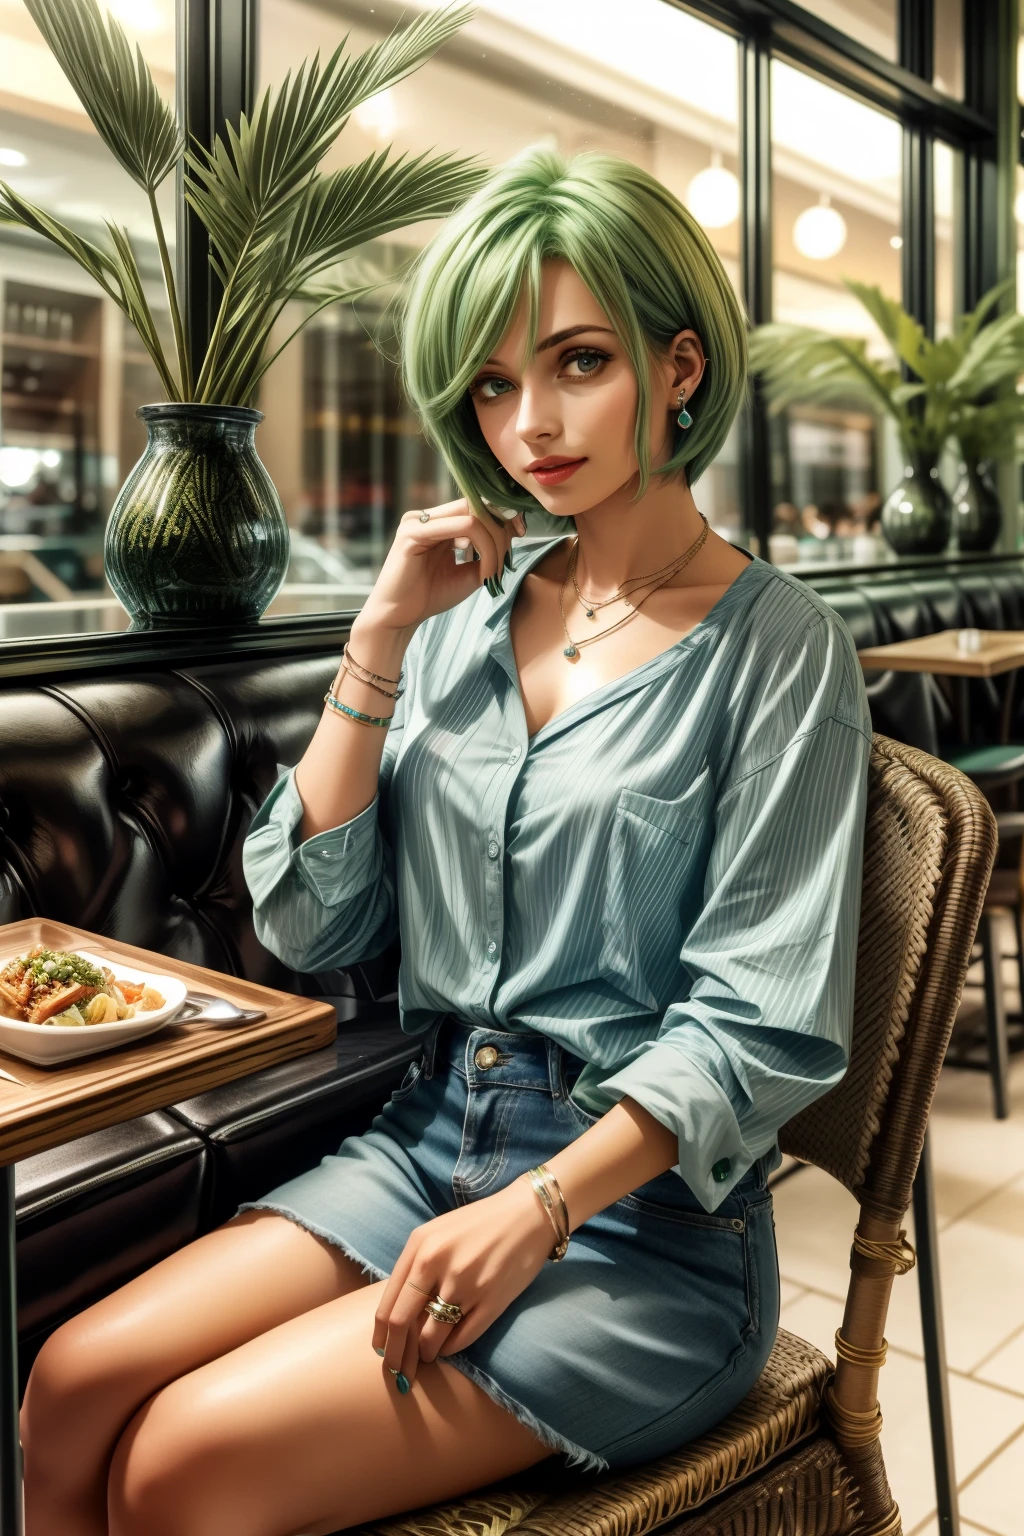 弗雷德里卡·格林希爾, 25歲, 捷径, 綠髮, wea戒指 a light Blue casual shirts fashion at a casual restaurant, 坐在椅子上 , ear戒指s, 項鍊, 戒指, 手鐲, 